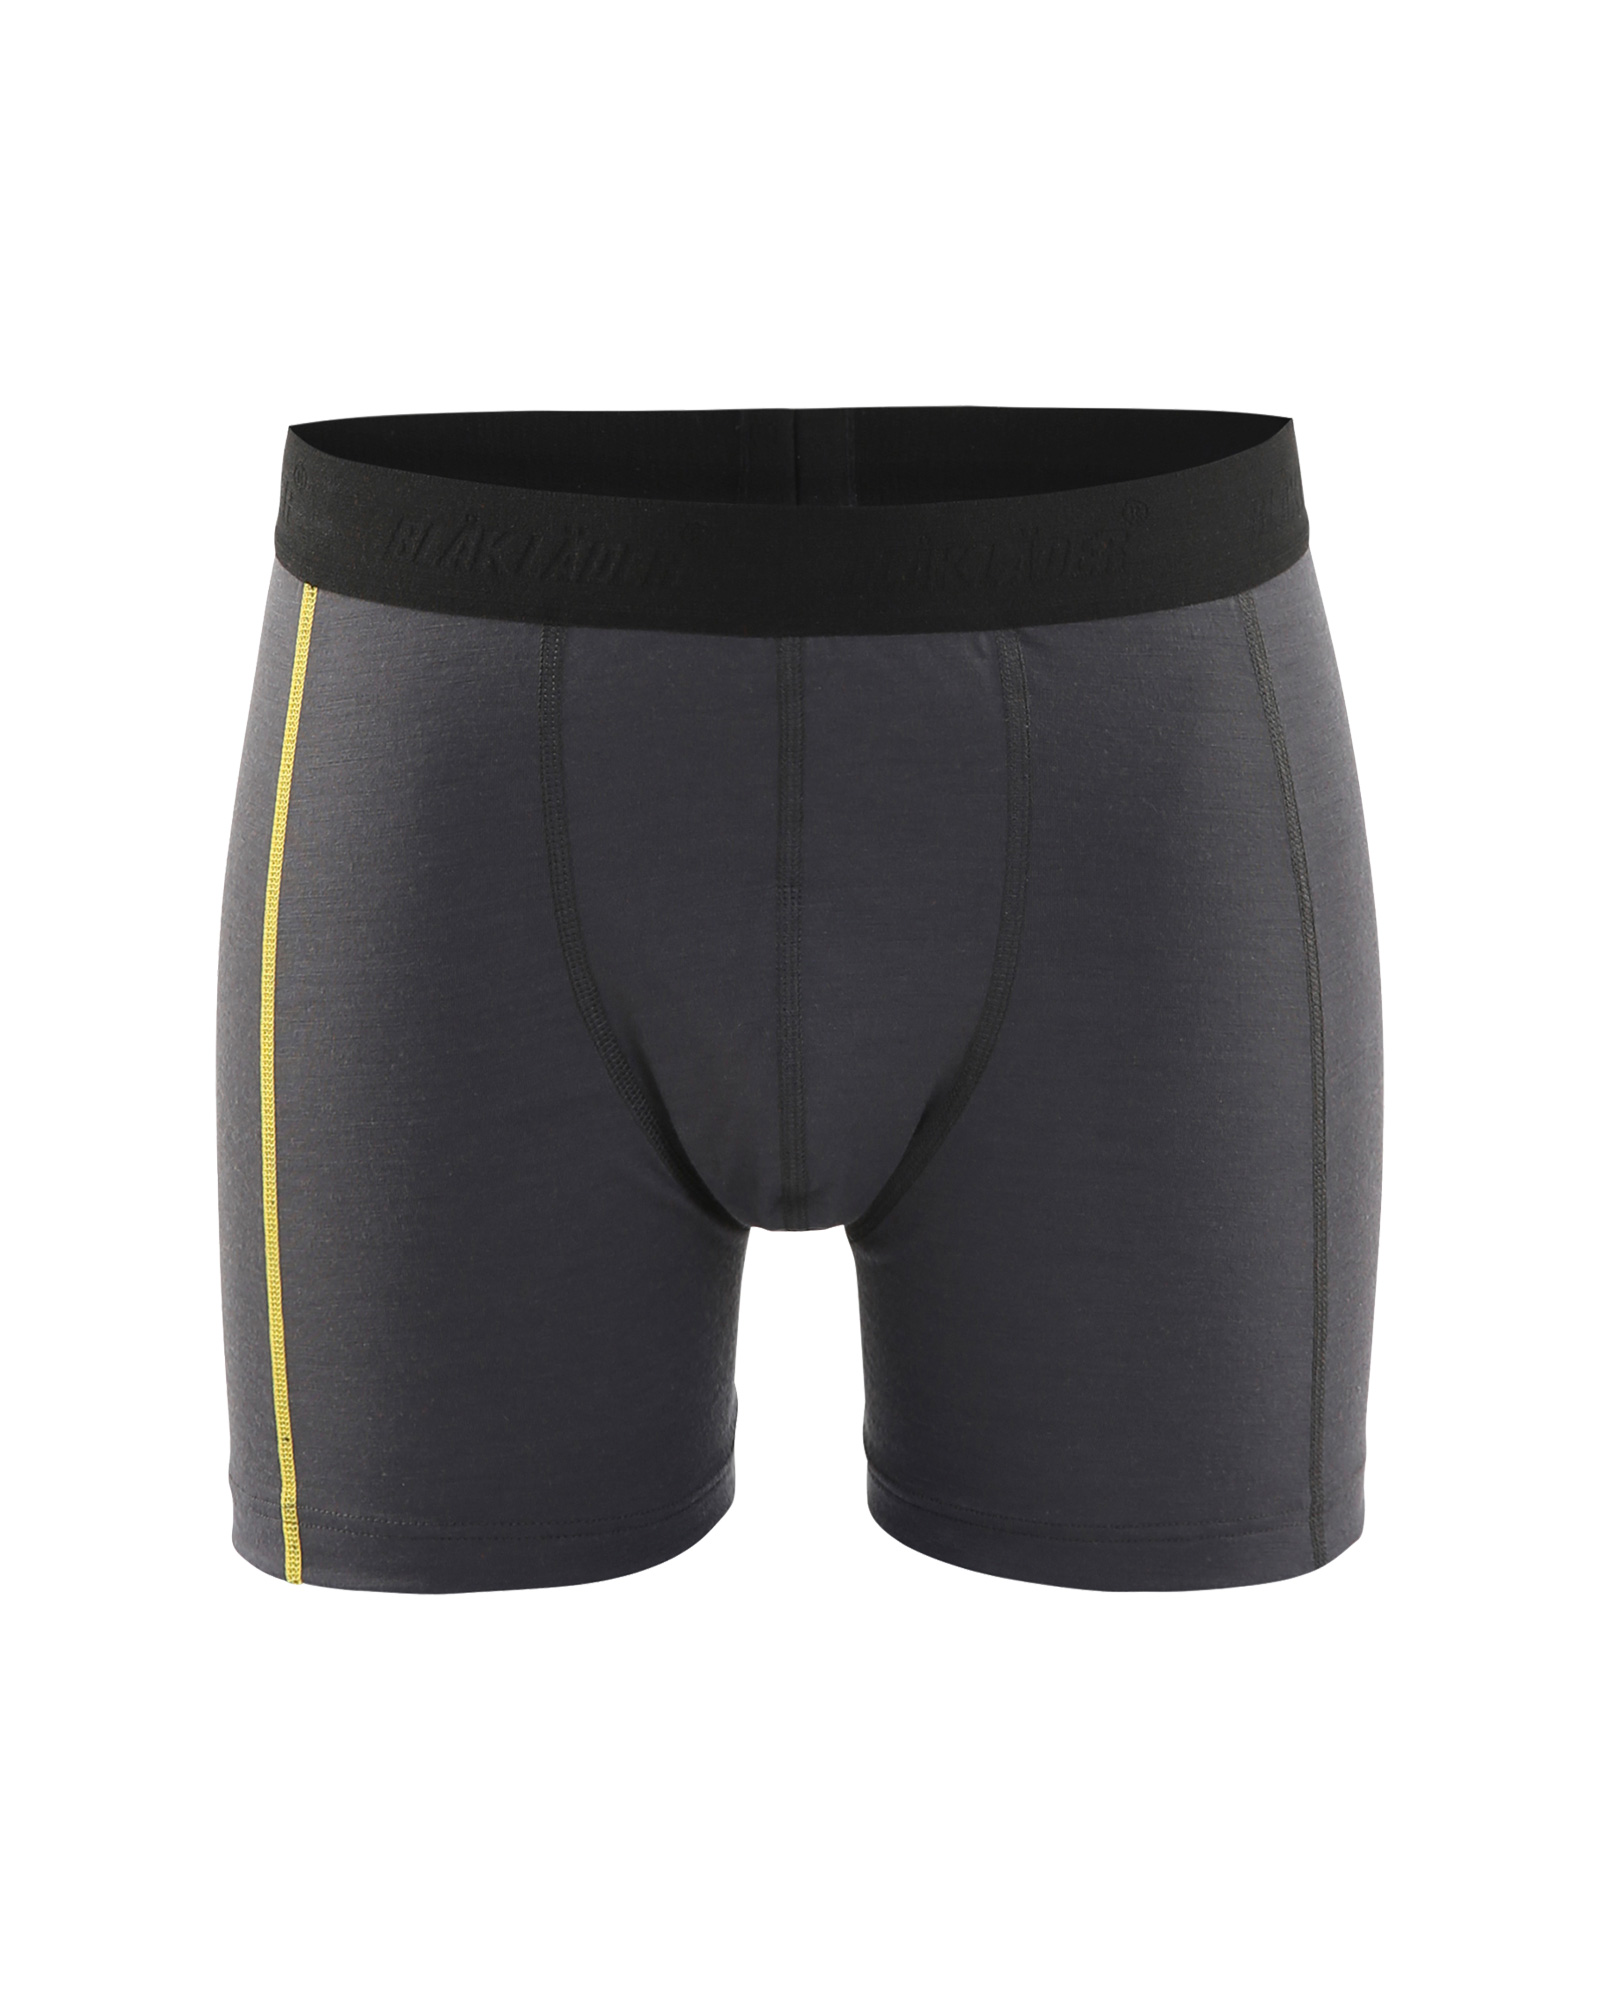 Boxer shorts XLIGHT